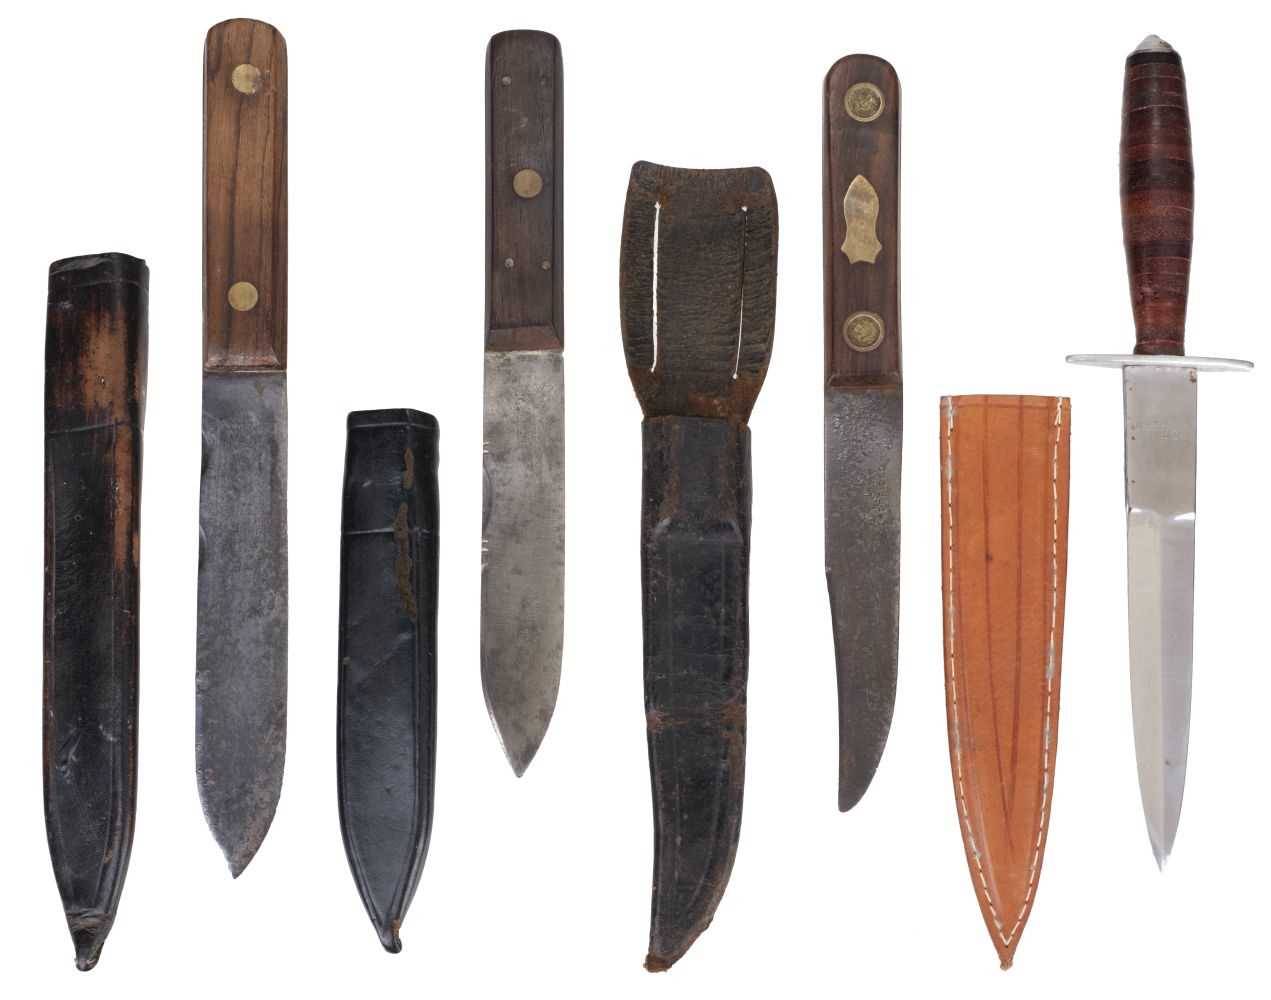 Lot 86 - Knives. 19th century hunting knives by Green River Company and Bushman